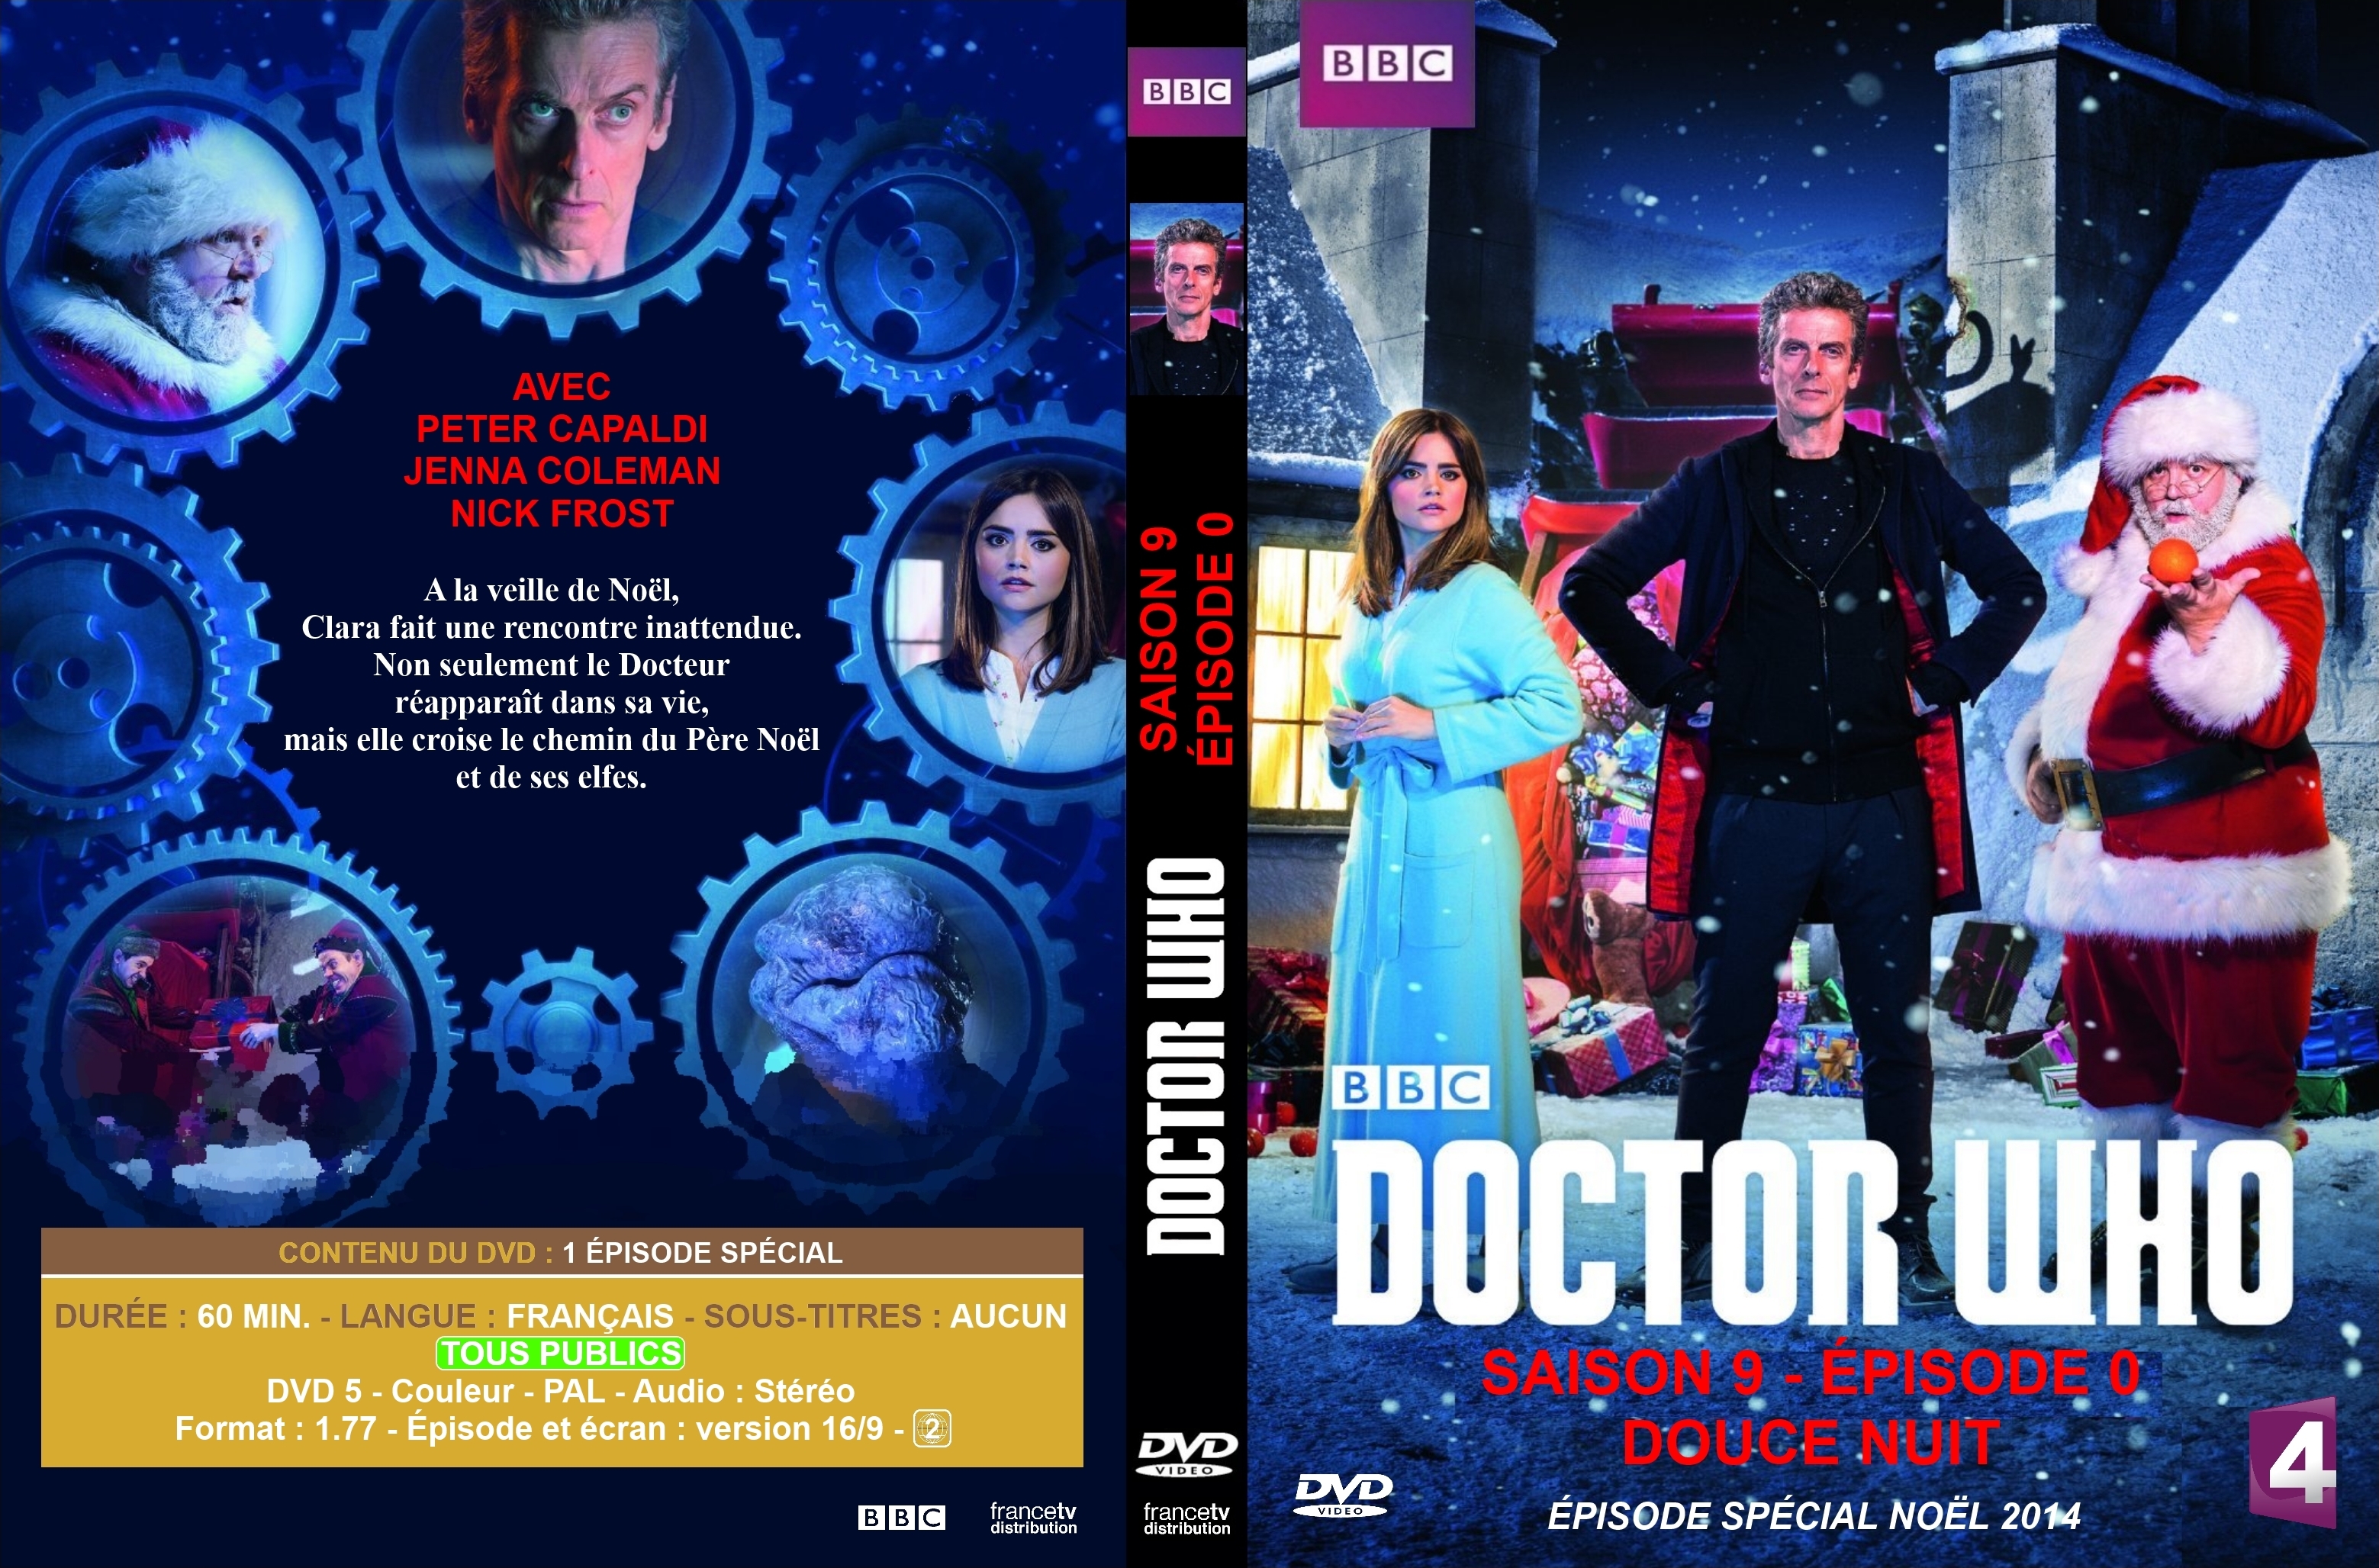 Jaquette DVD Doctor Who Saison 9 Episode 0 custom